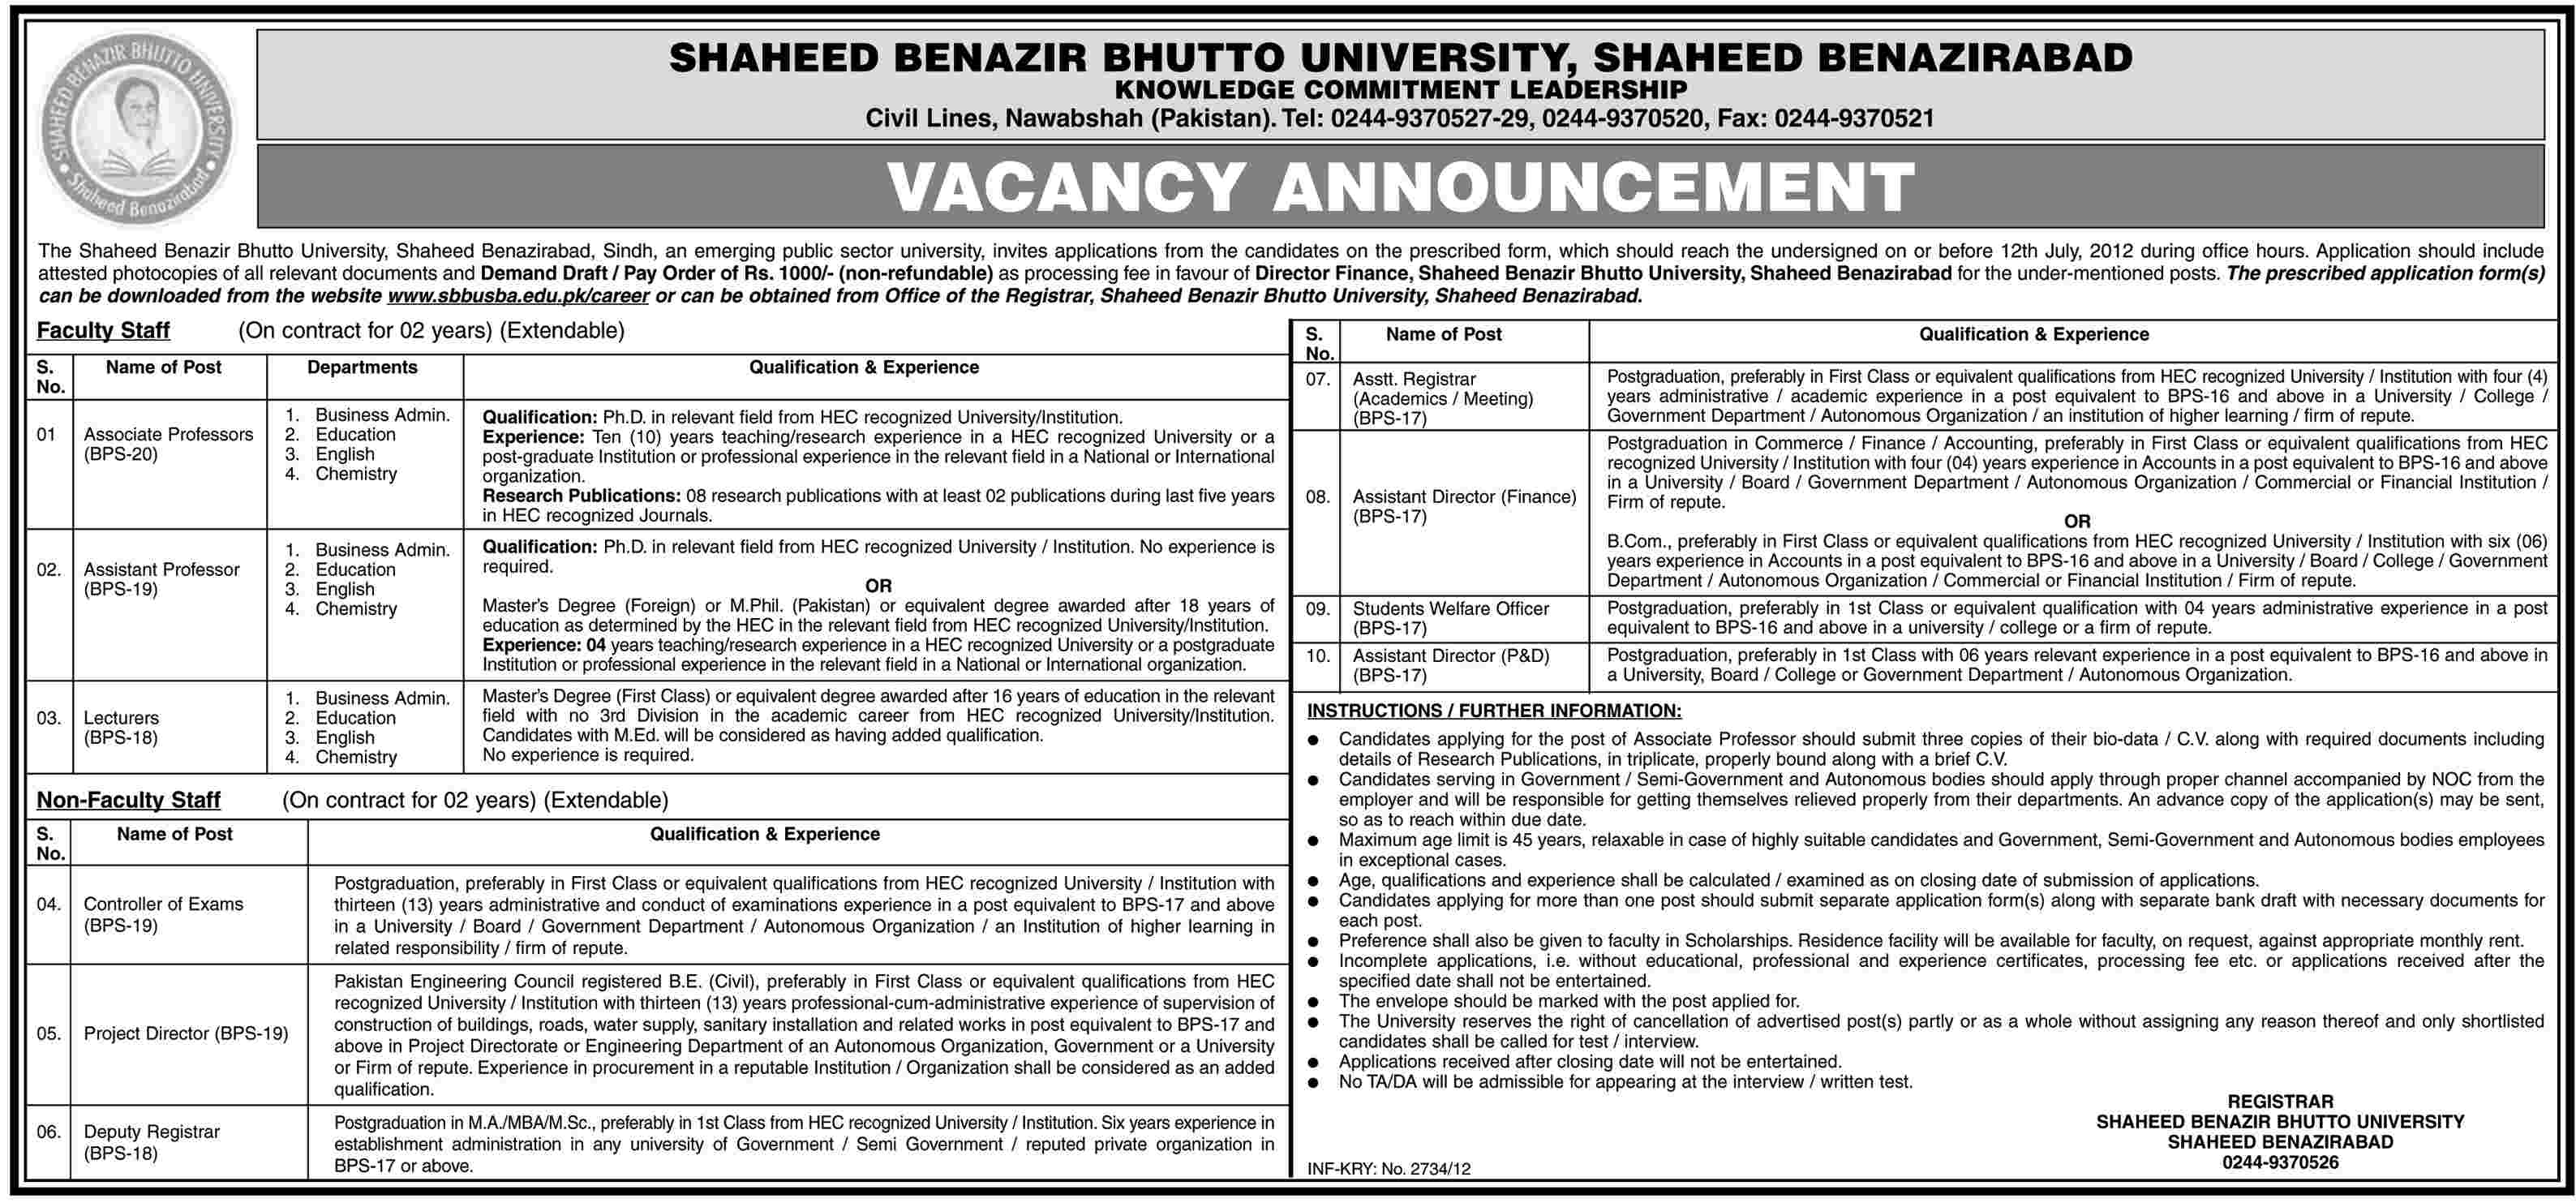 Teaching and Non-Teaching Staff Required at Shaheed Benazir Bhutto University (Govt. job)